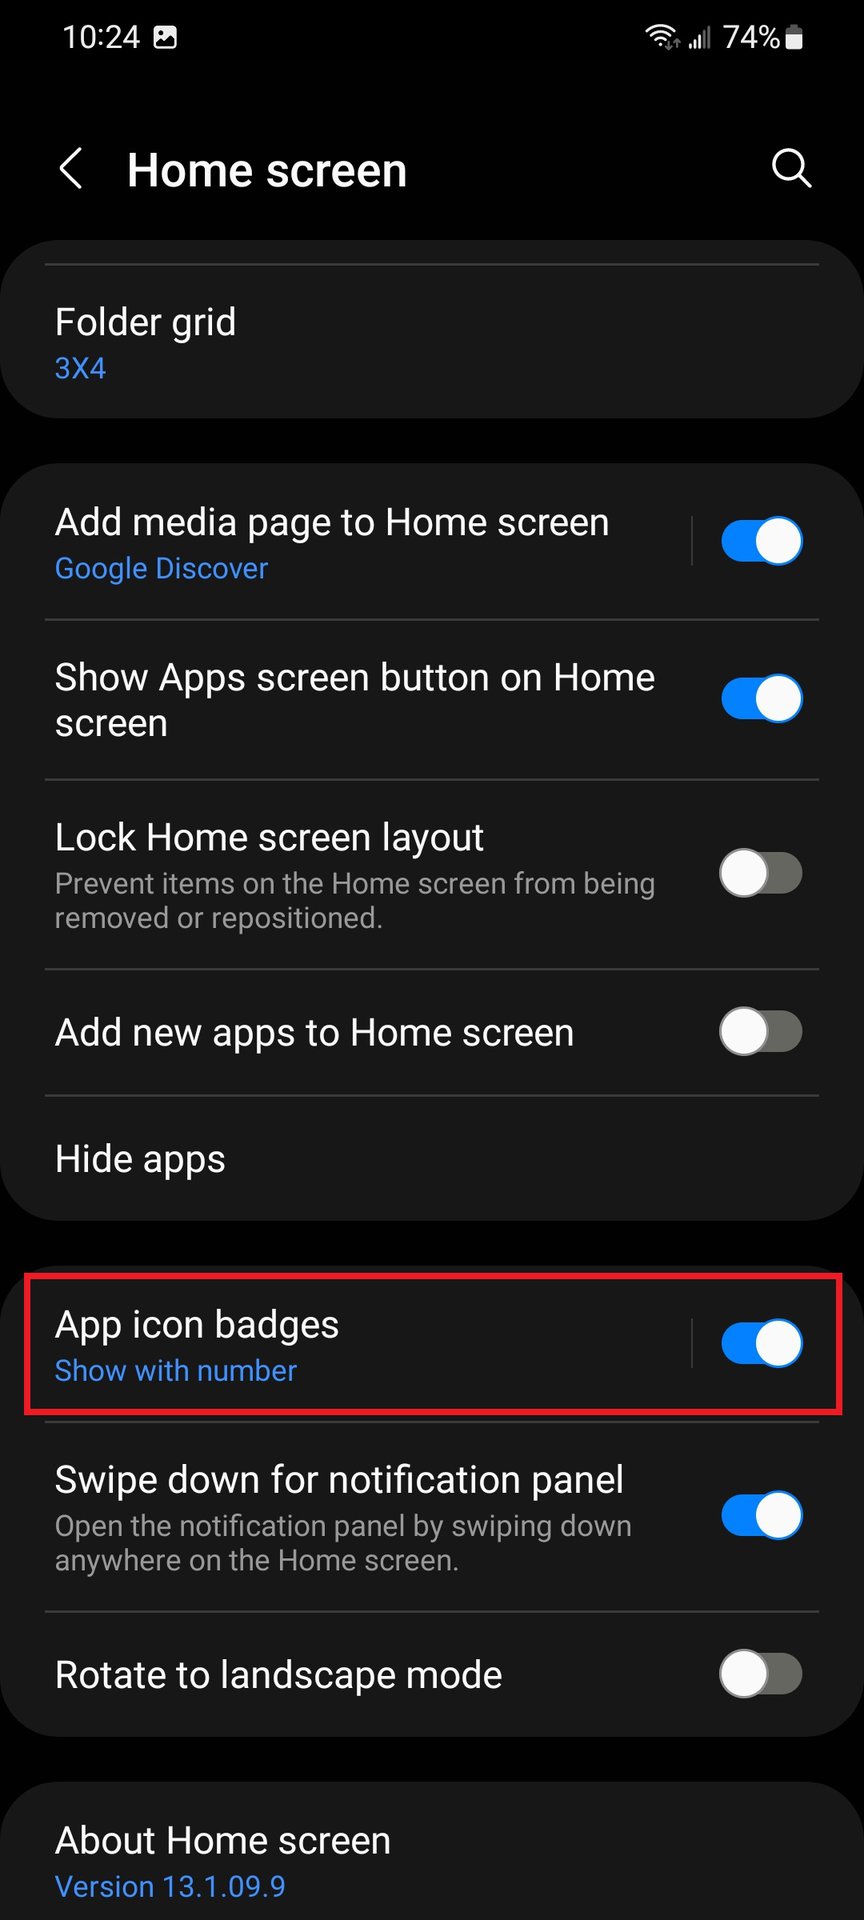 app icon badges